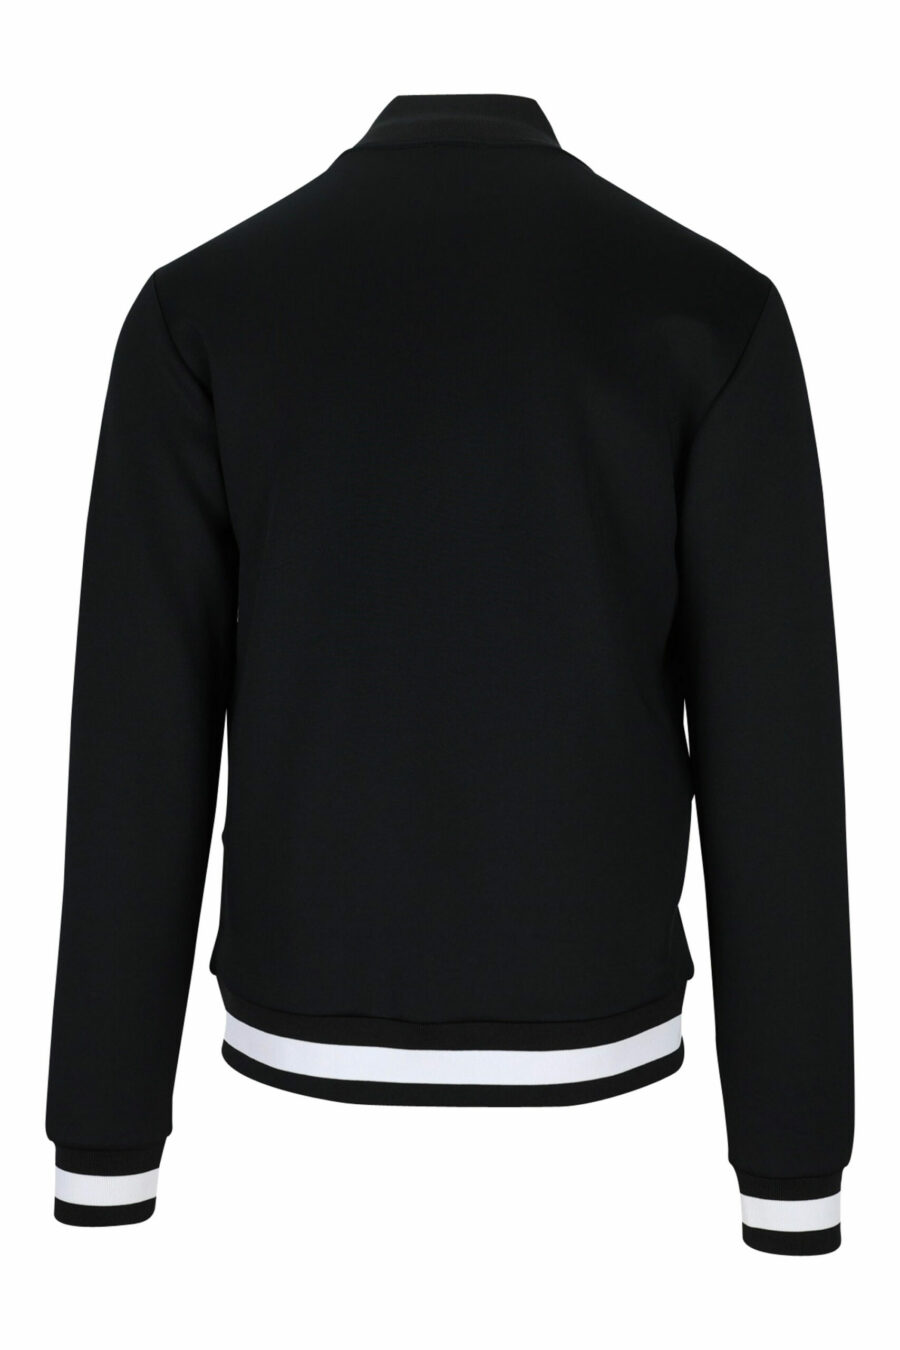 Black zip-up sweatshirt with metal mini-logo "lux identity" - 8057767630782 1 scaled